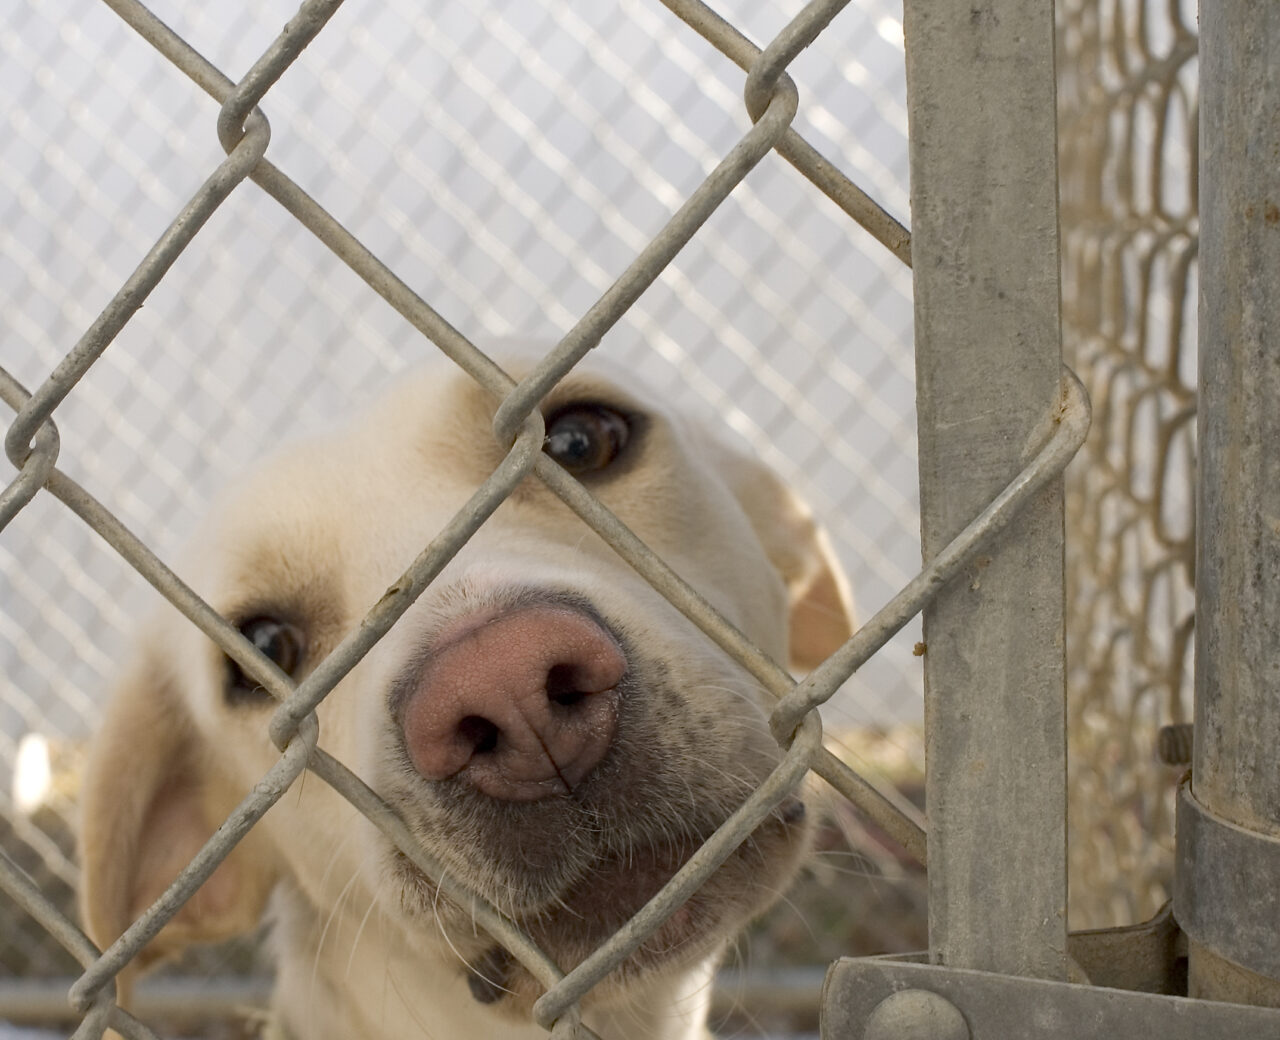 https://hunterspetsitting.com/wp-content/uploads/2020/09/Dog_in_animal_shelter_in_Washington_Iowa-1280x1040.jpg